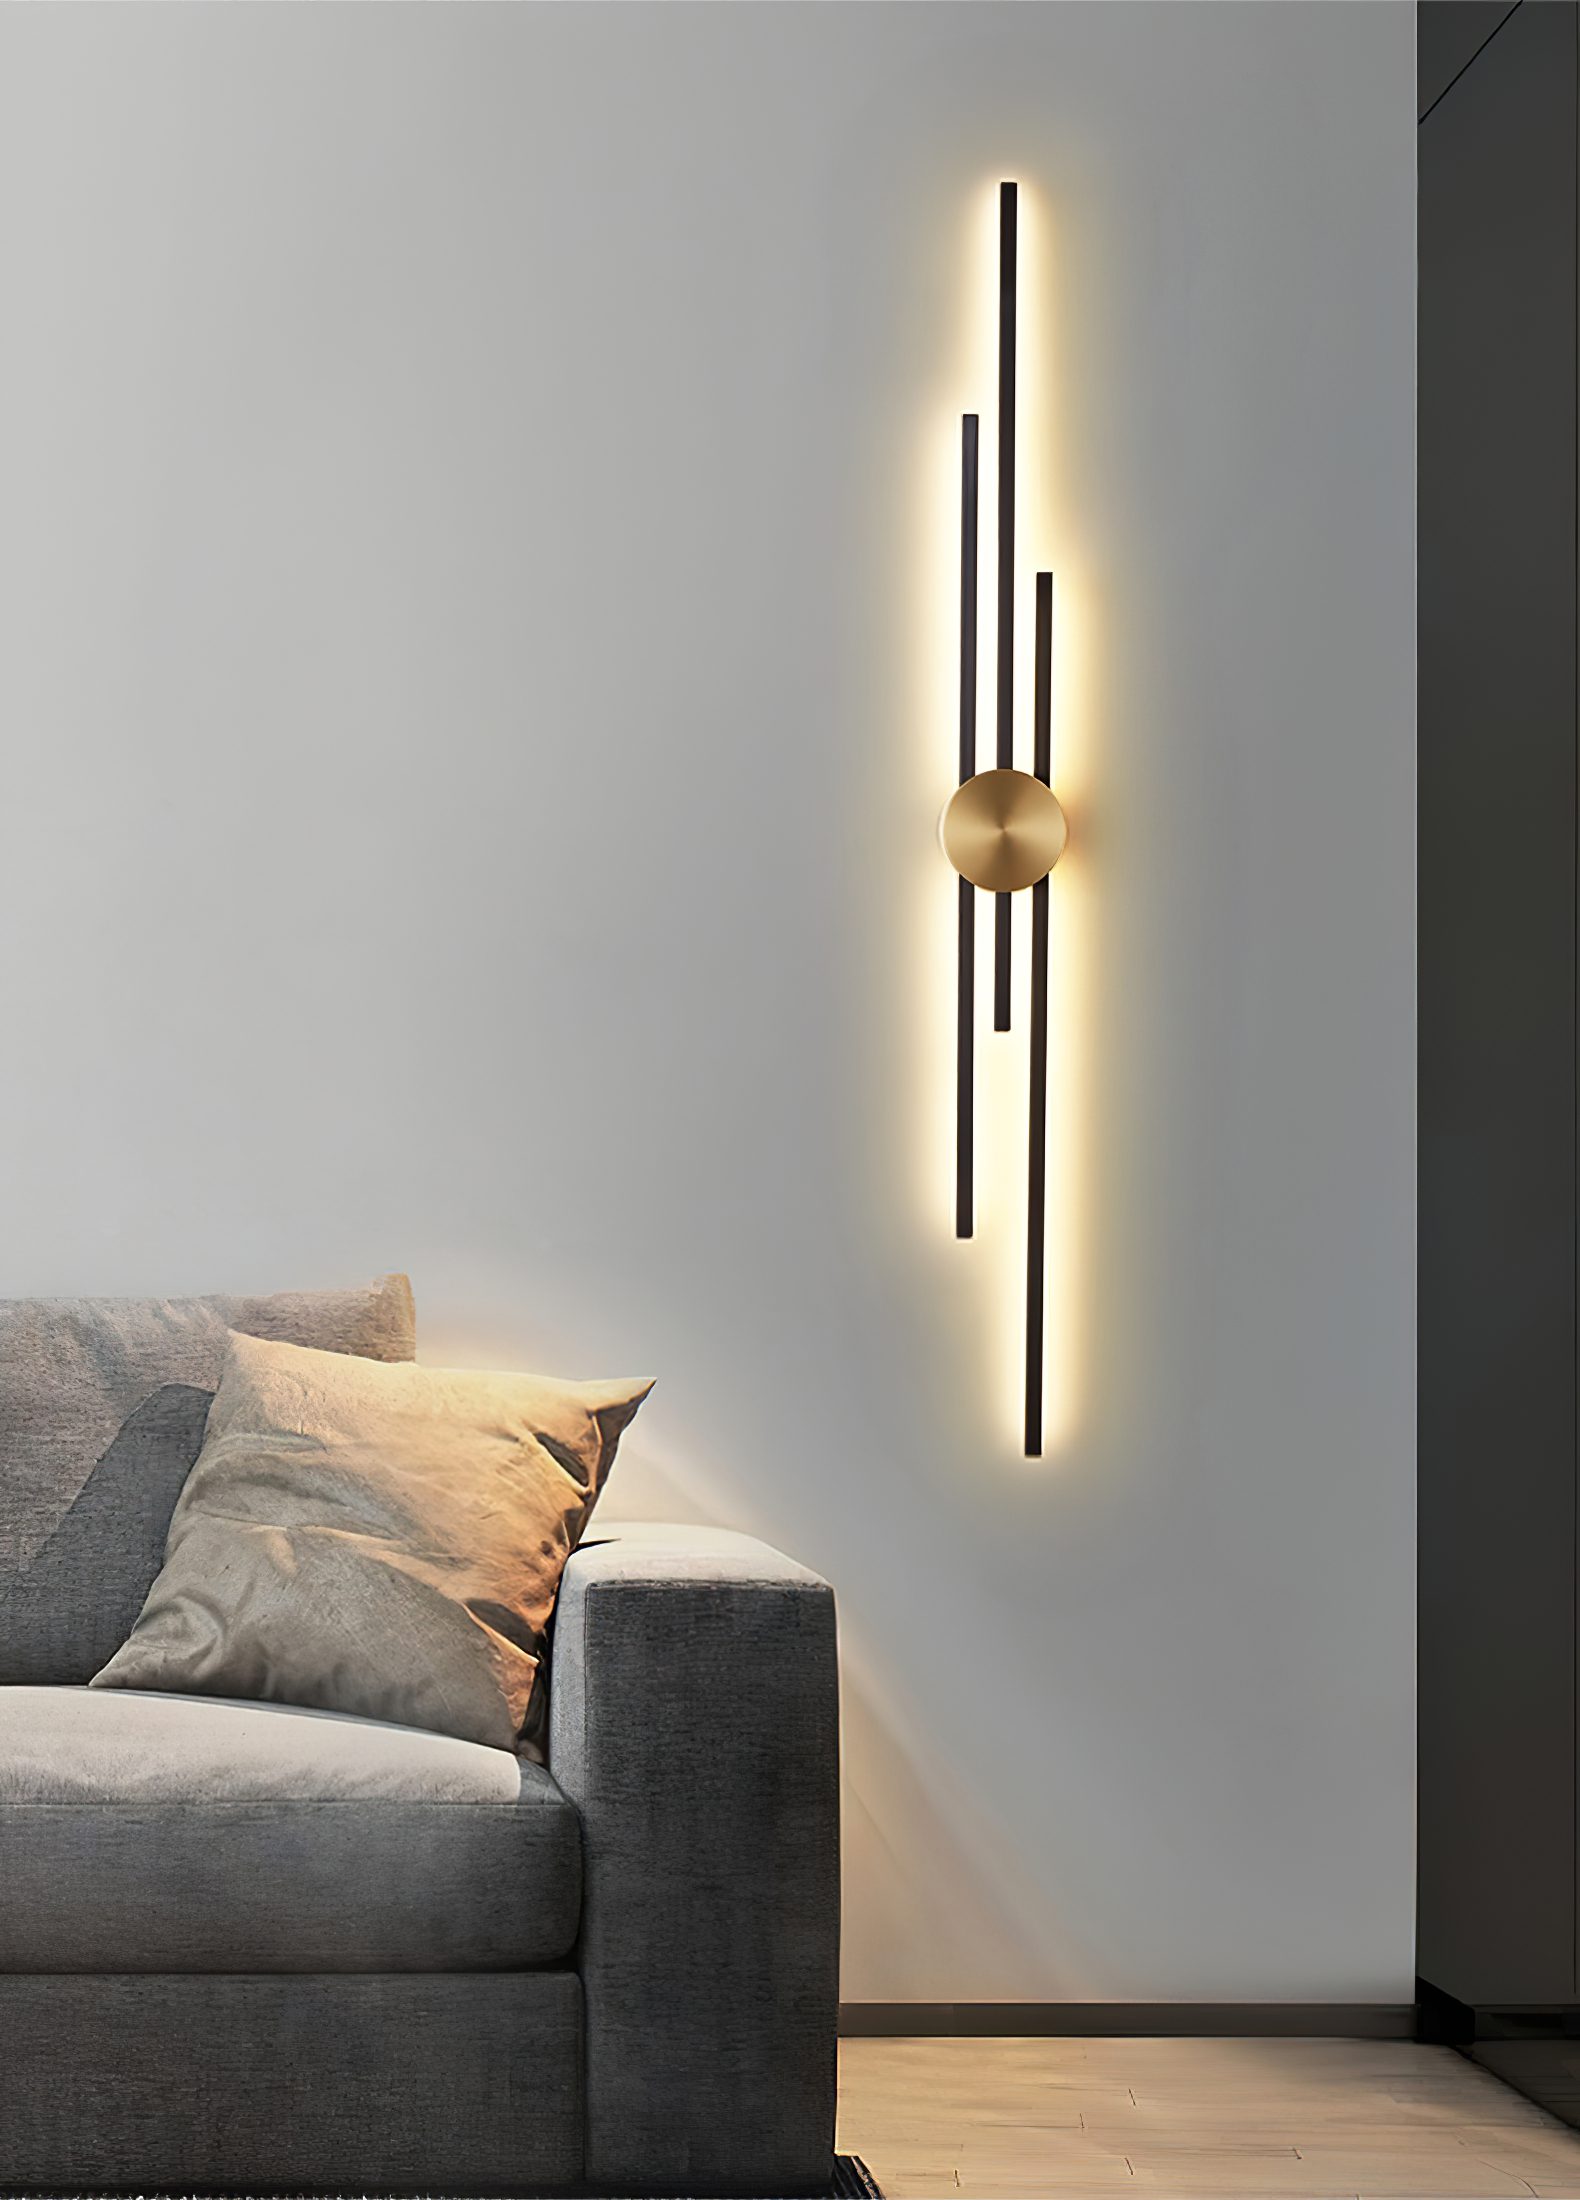 6 Individual Stylish Line Wall Lights - Mooielight